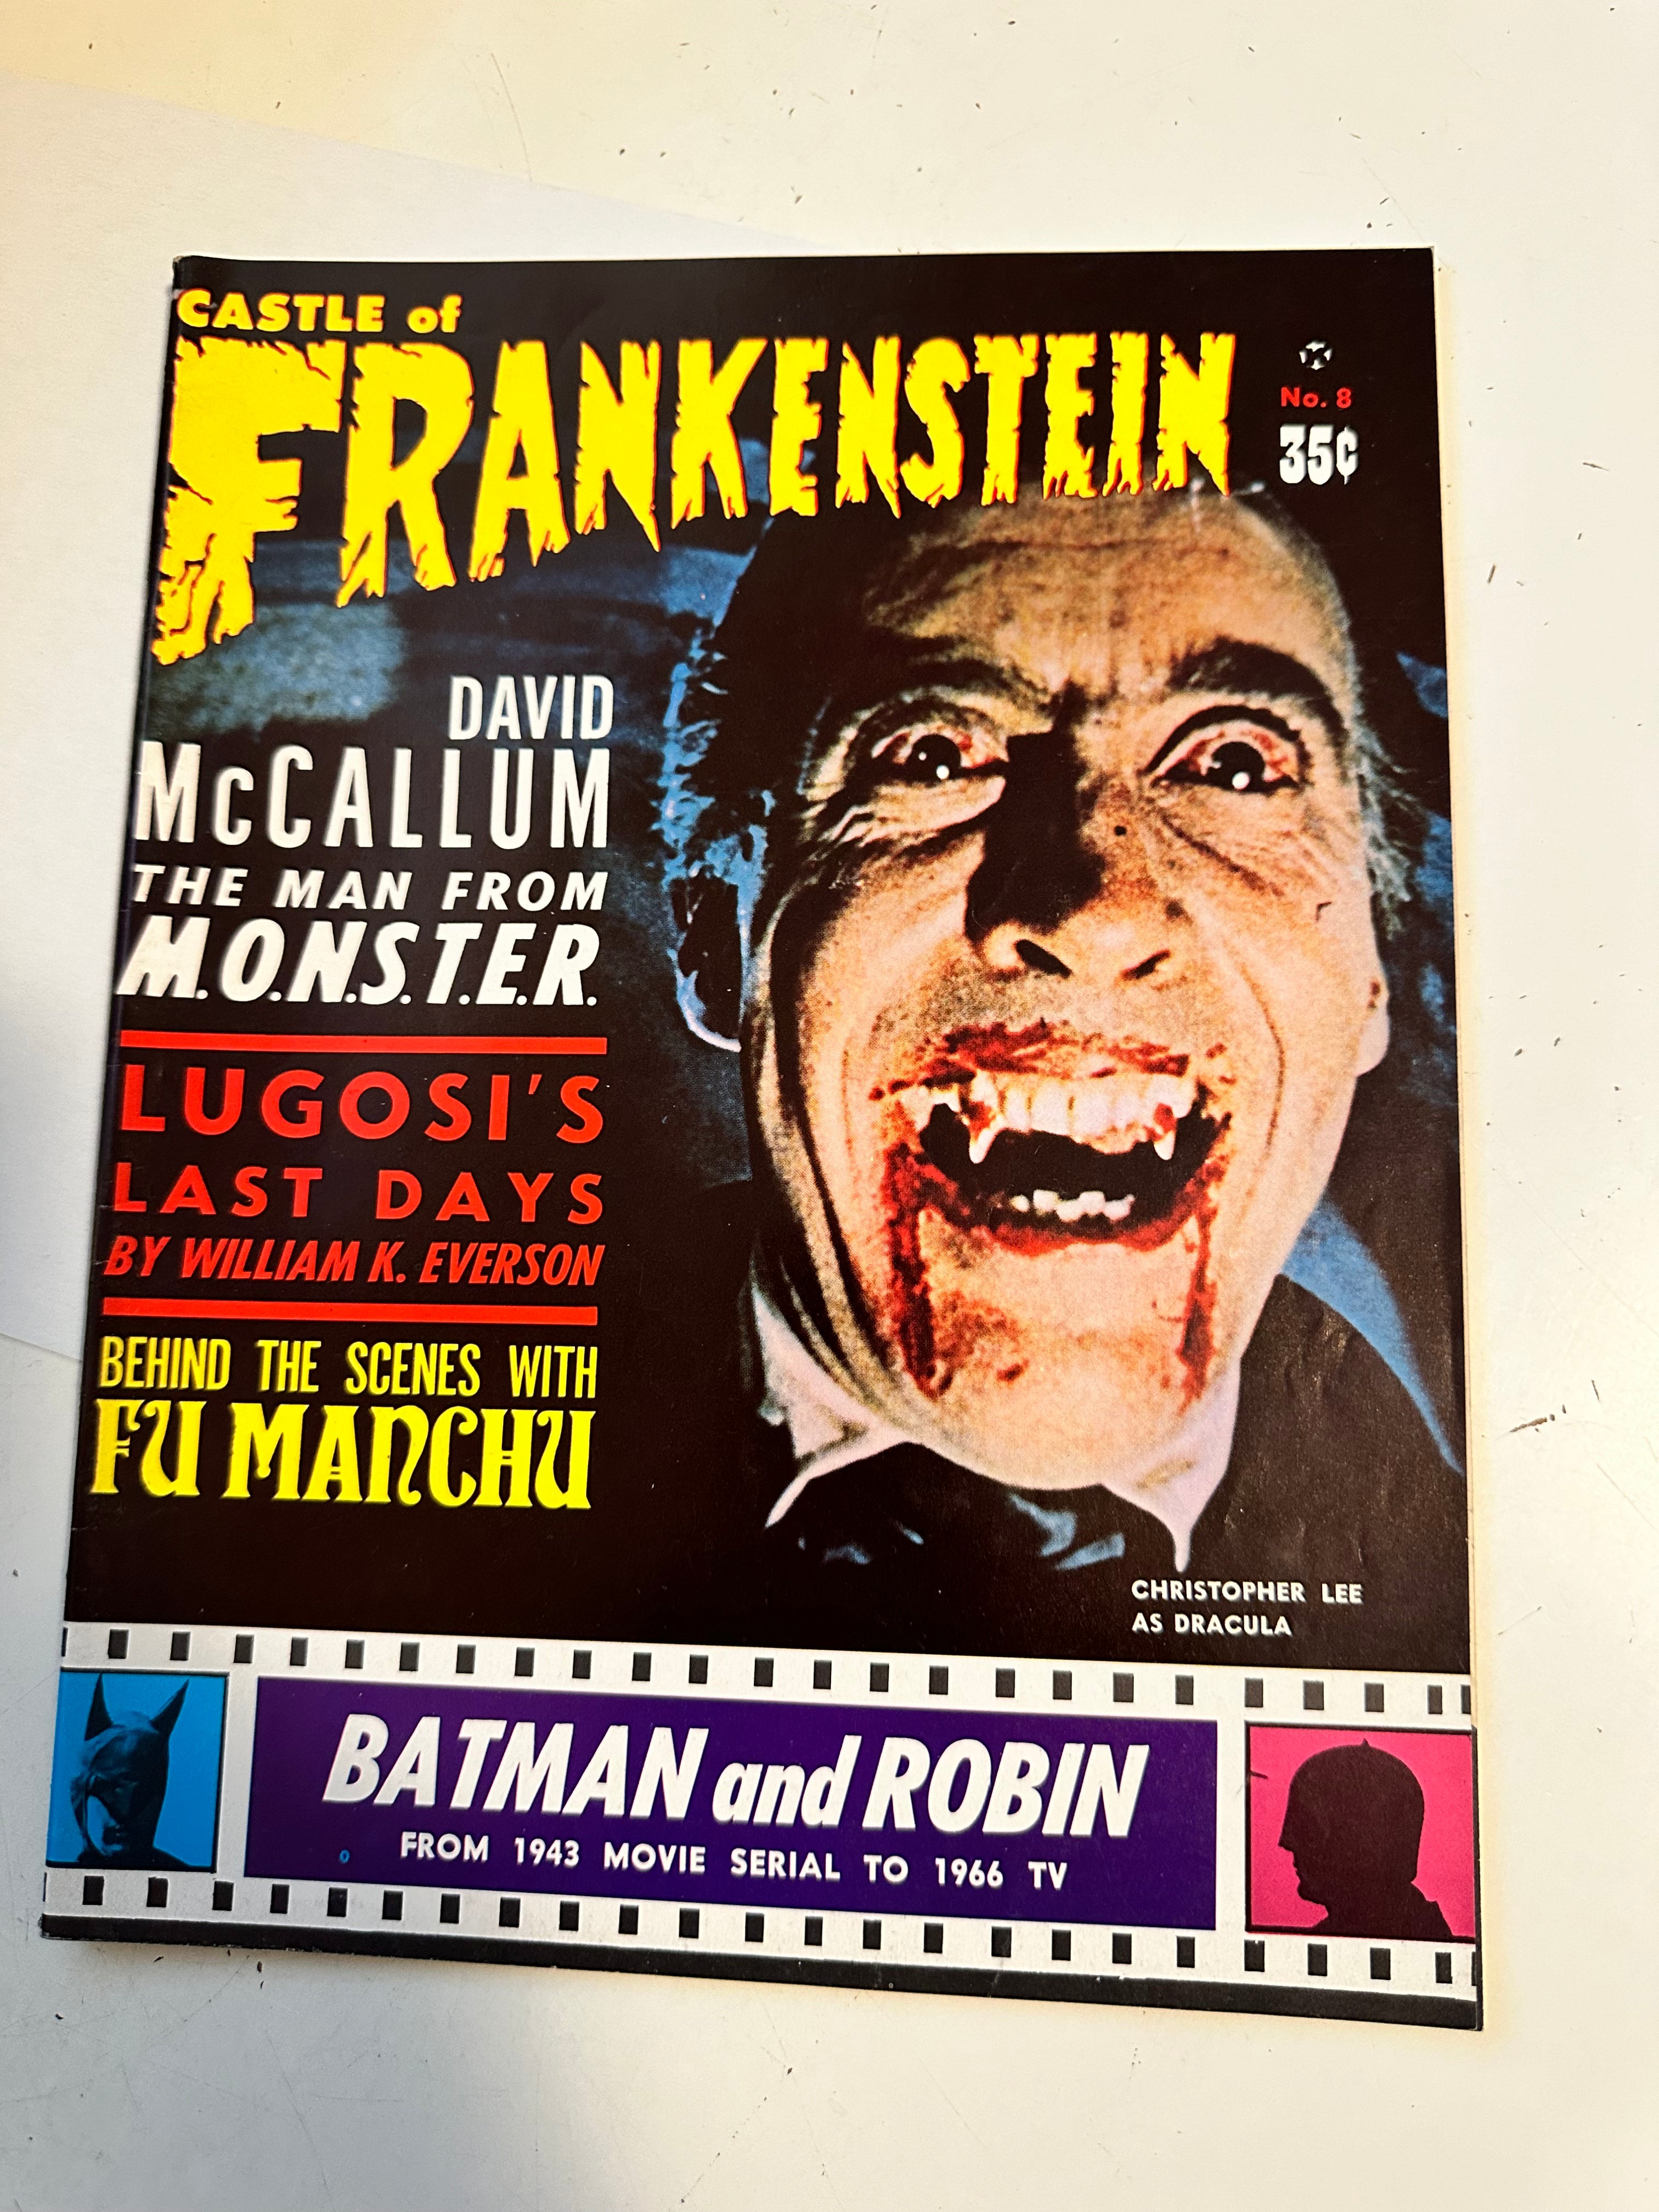 Castle of Frankenstein #8 high grade condition, horror magazine 1966